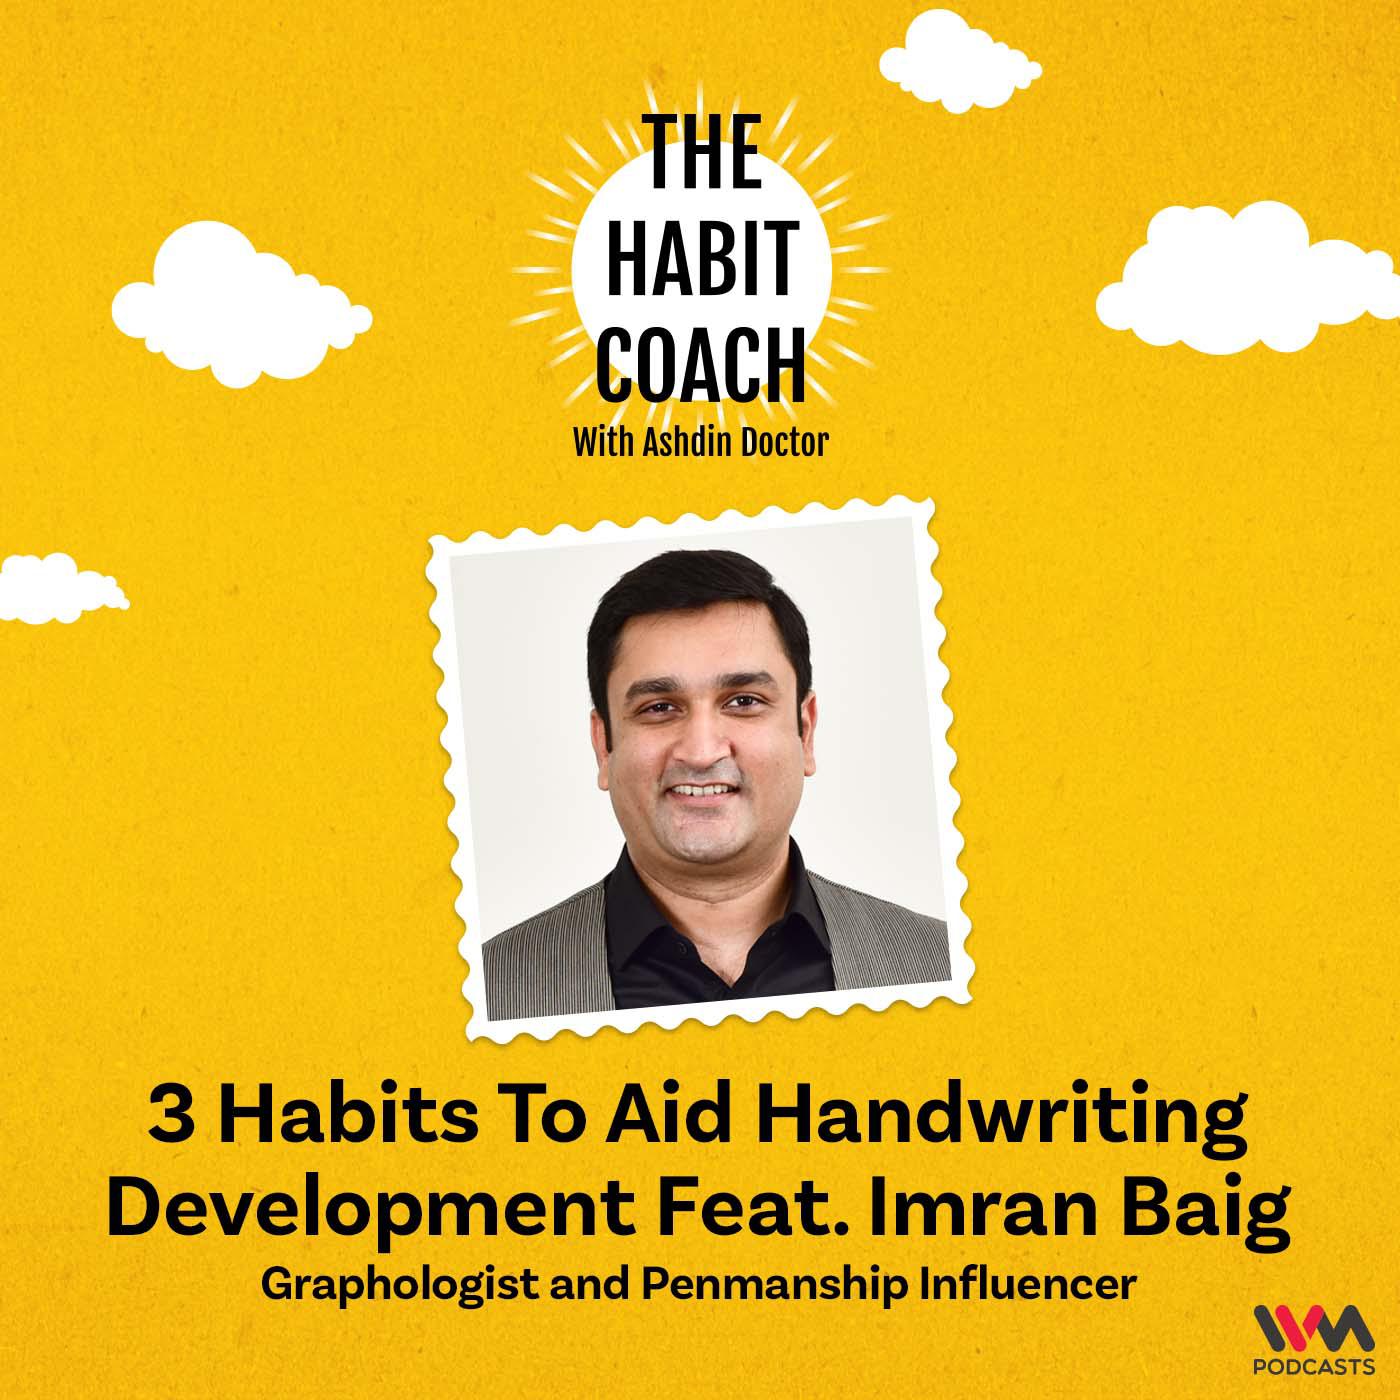 3 Habits To Aid Handwriting Development feat. Imran Baig